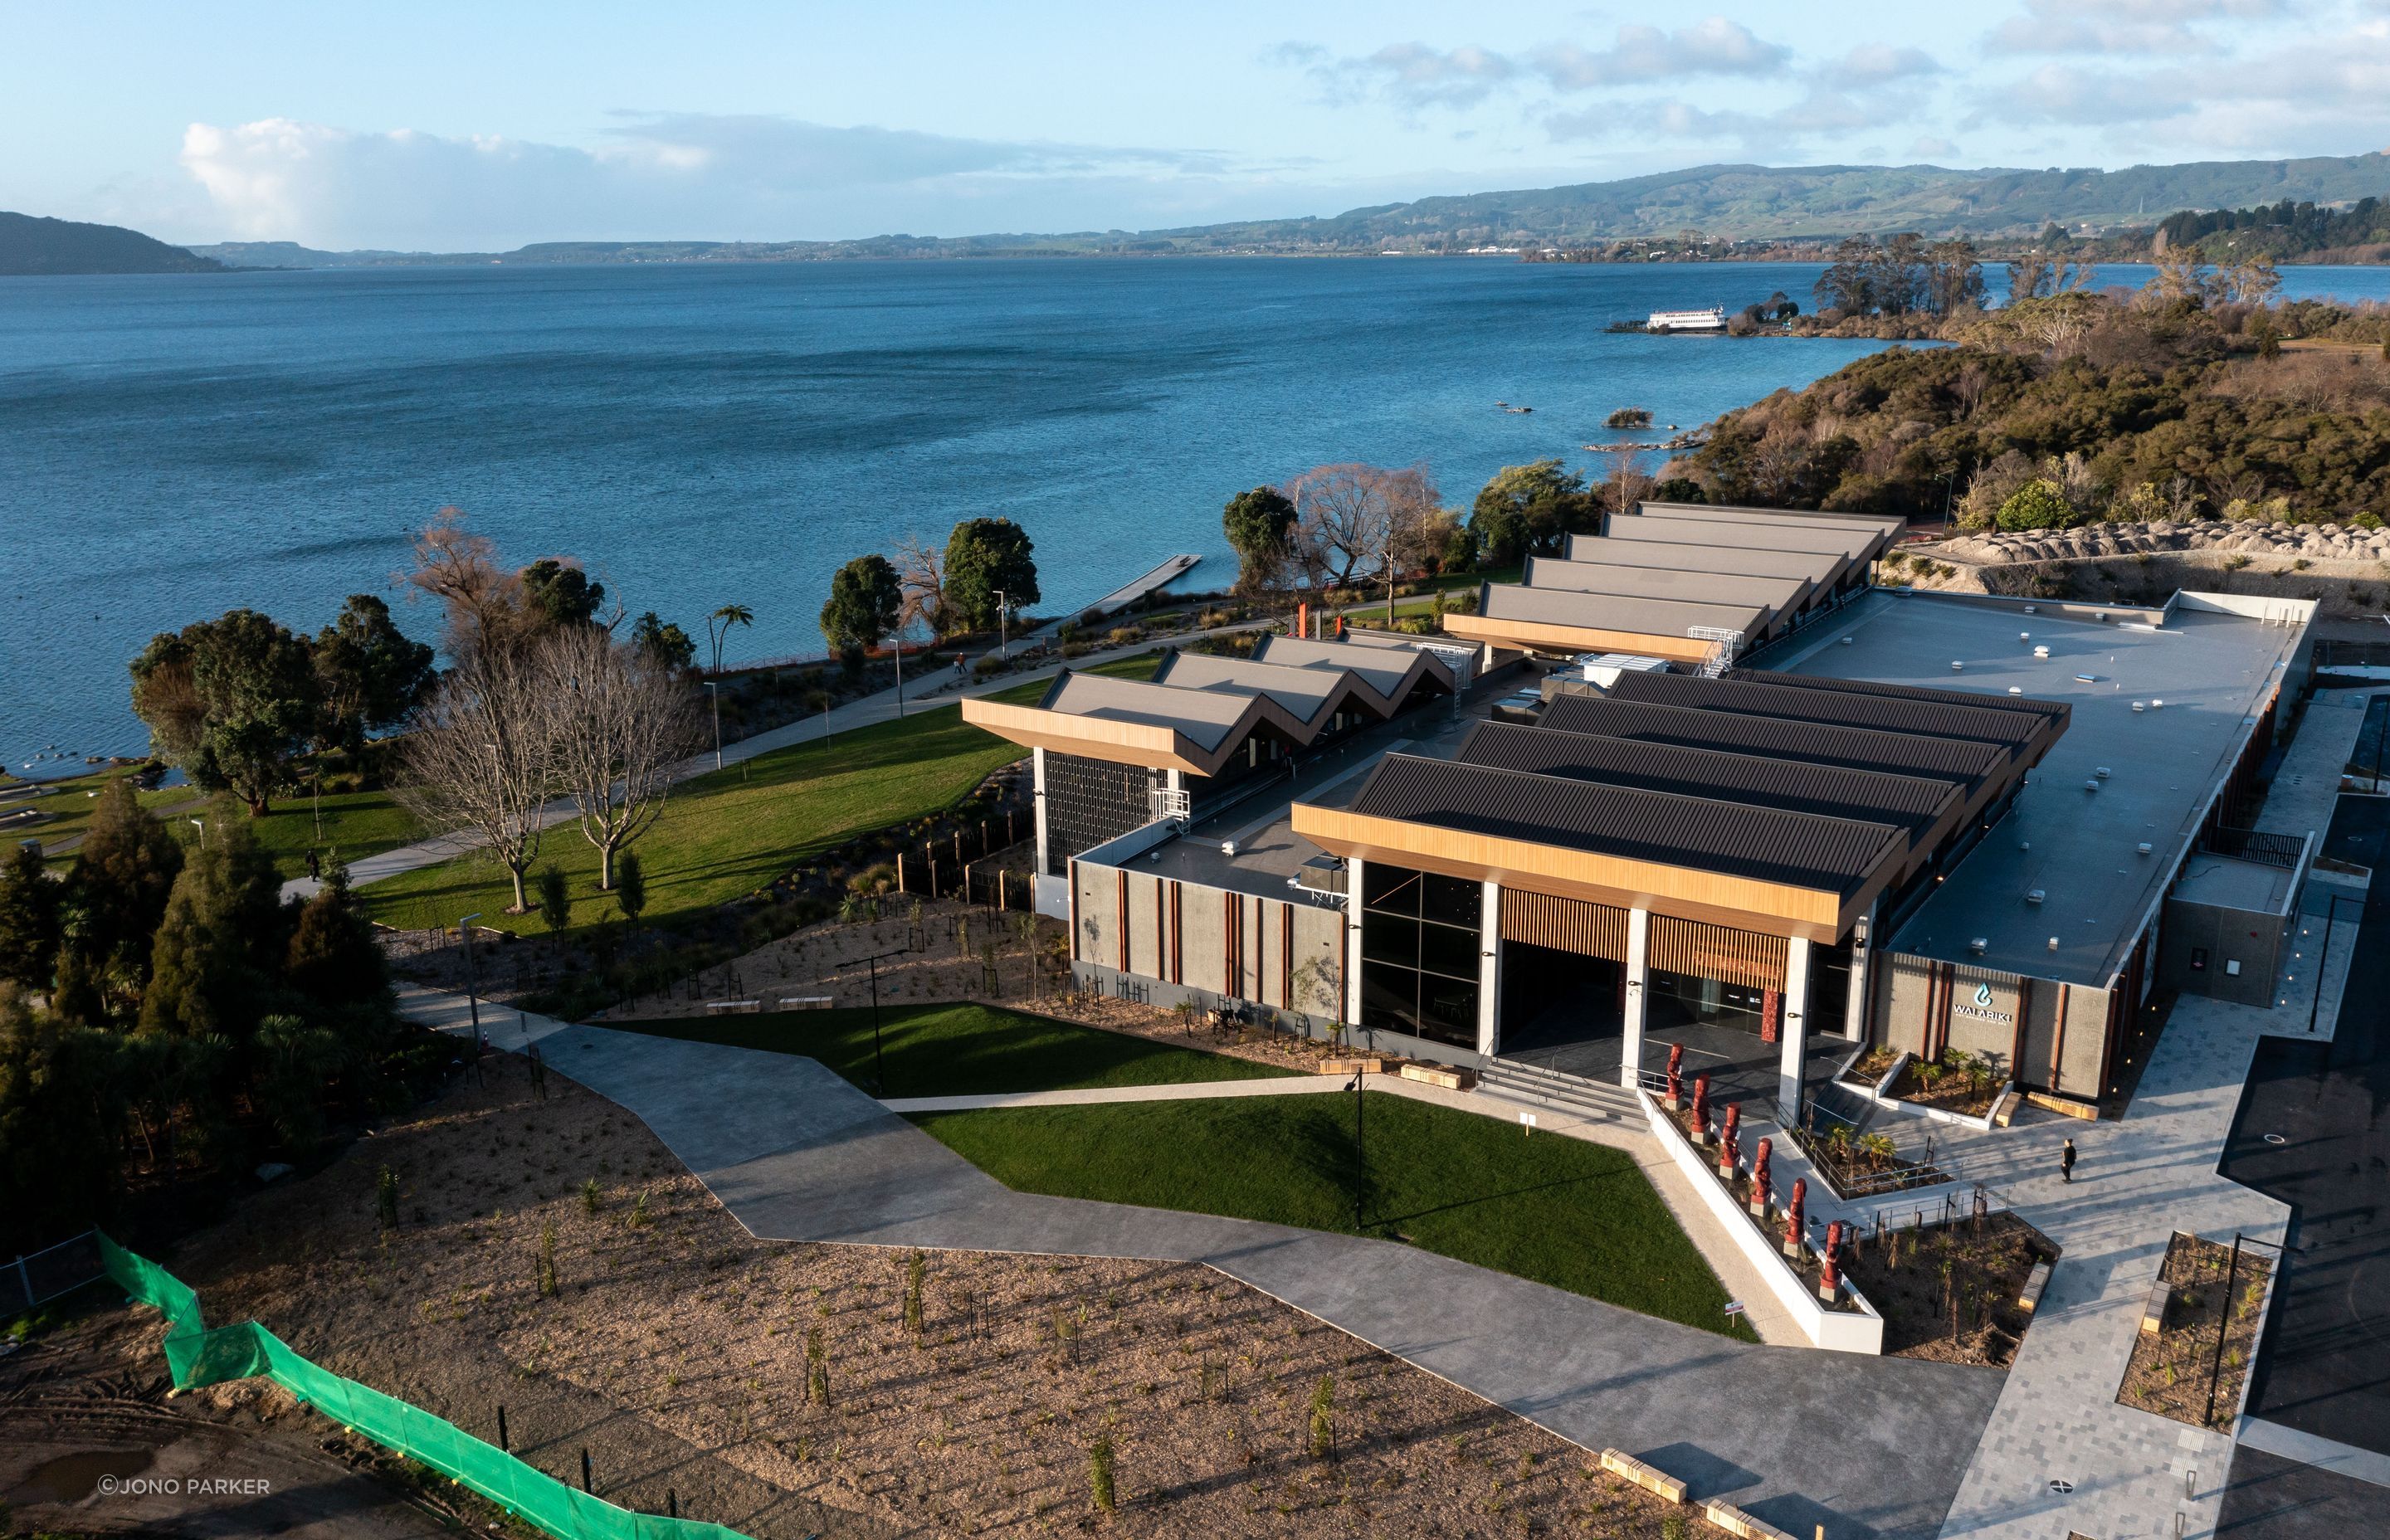 Wai Ariki has been built to take in the stunning views of Lake Rotorua